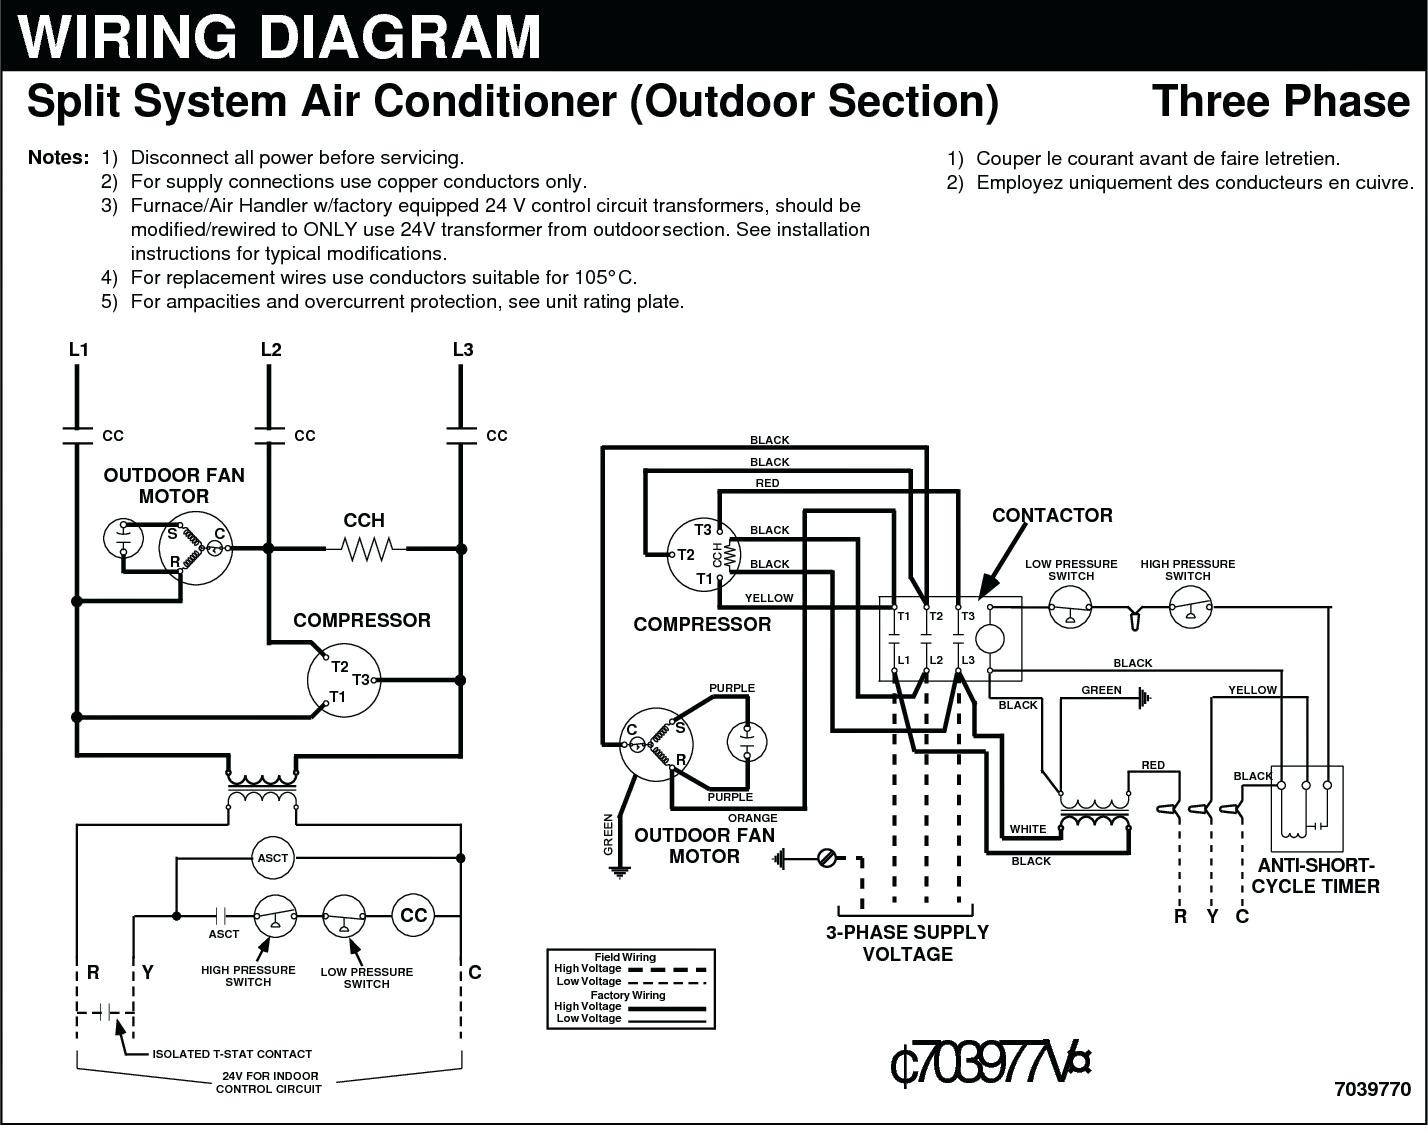 Home Ac pressor Wiring Diagram Wellread Me Hvac pressor Wiring Diagram Hvac pressor Diagram